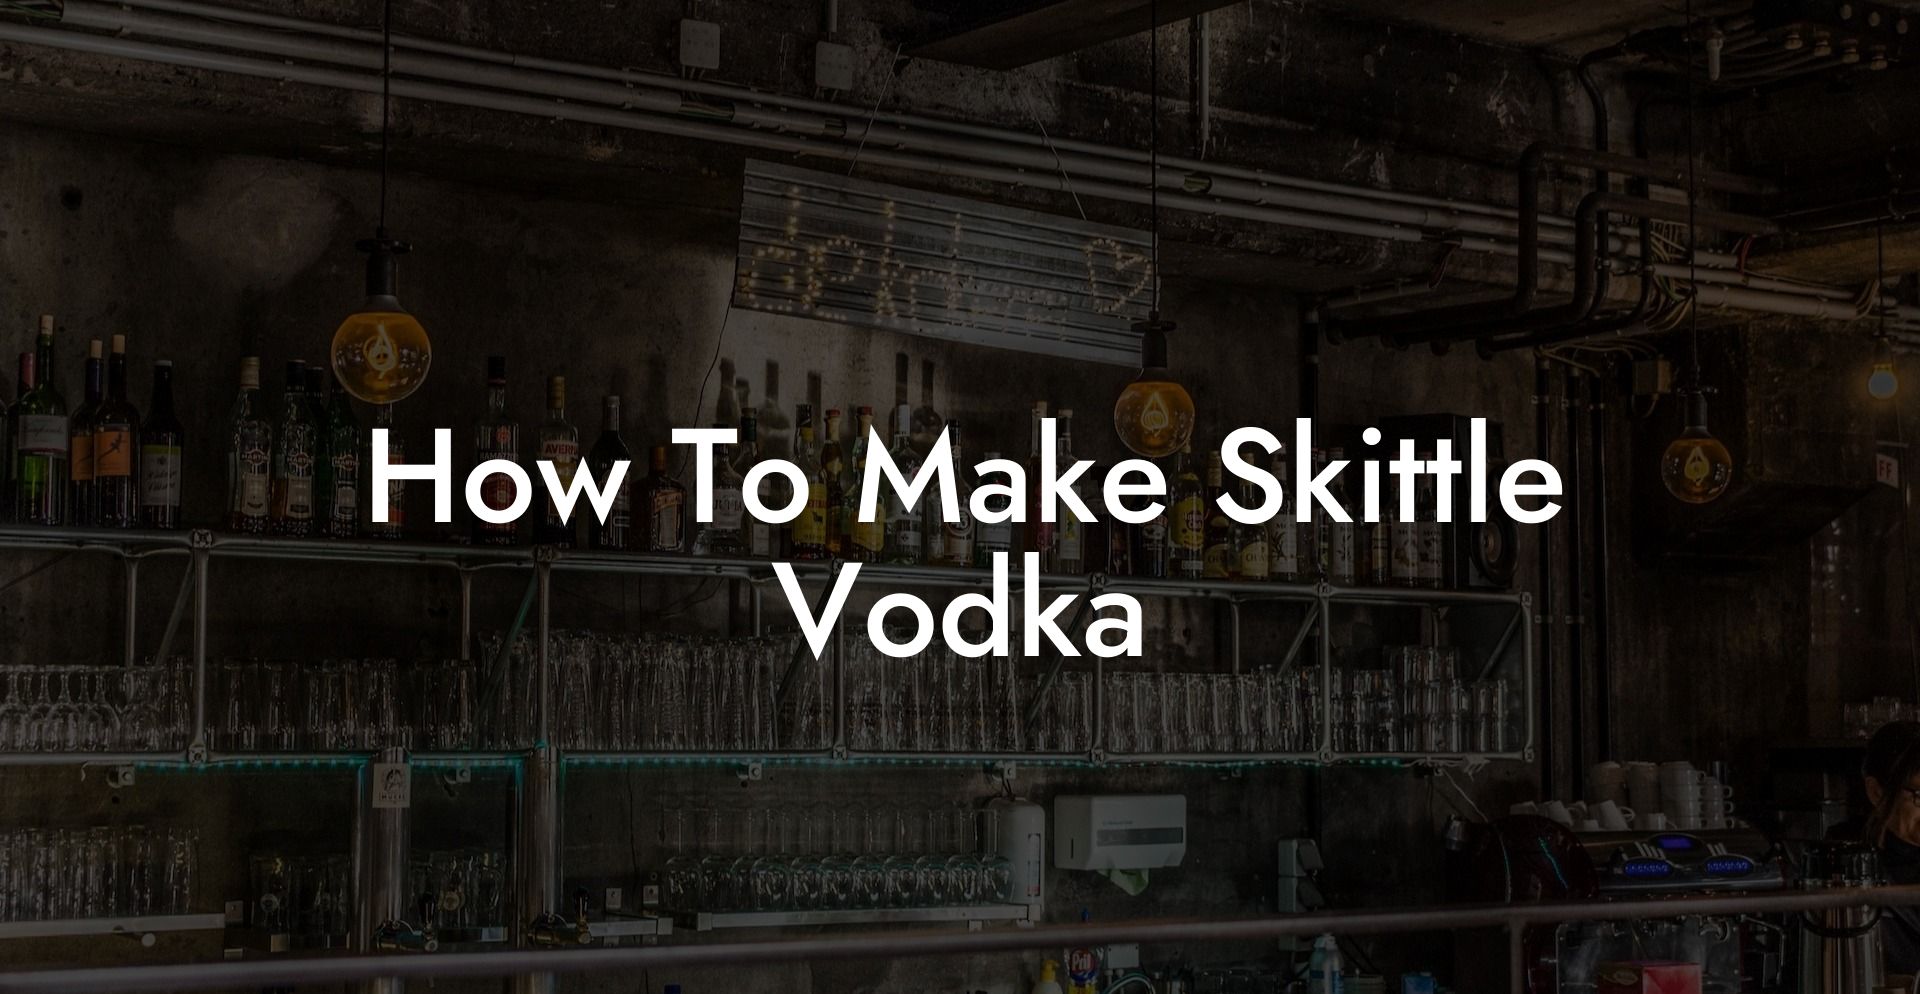 How To Make Skittle Vodka